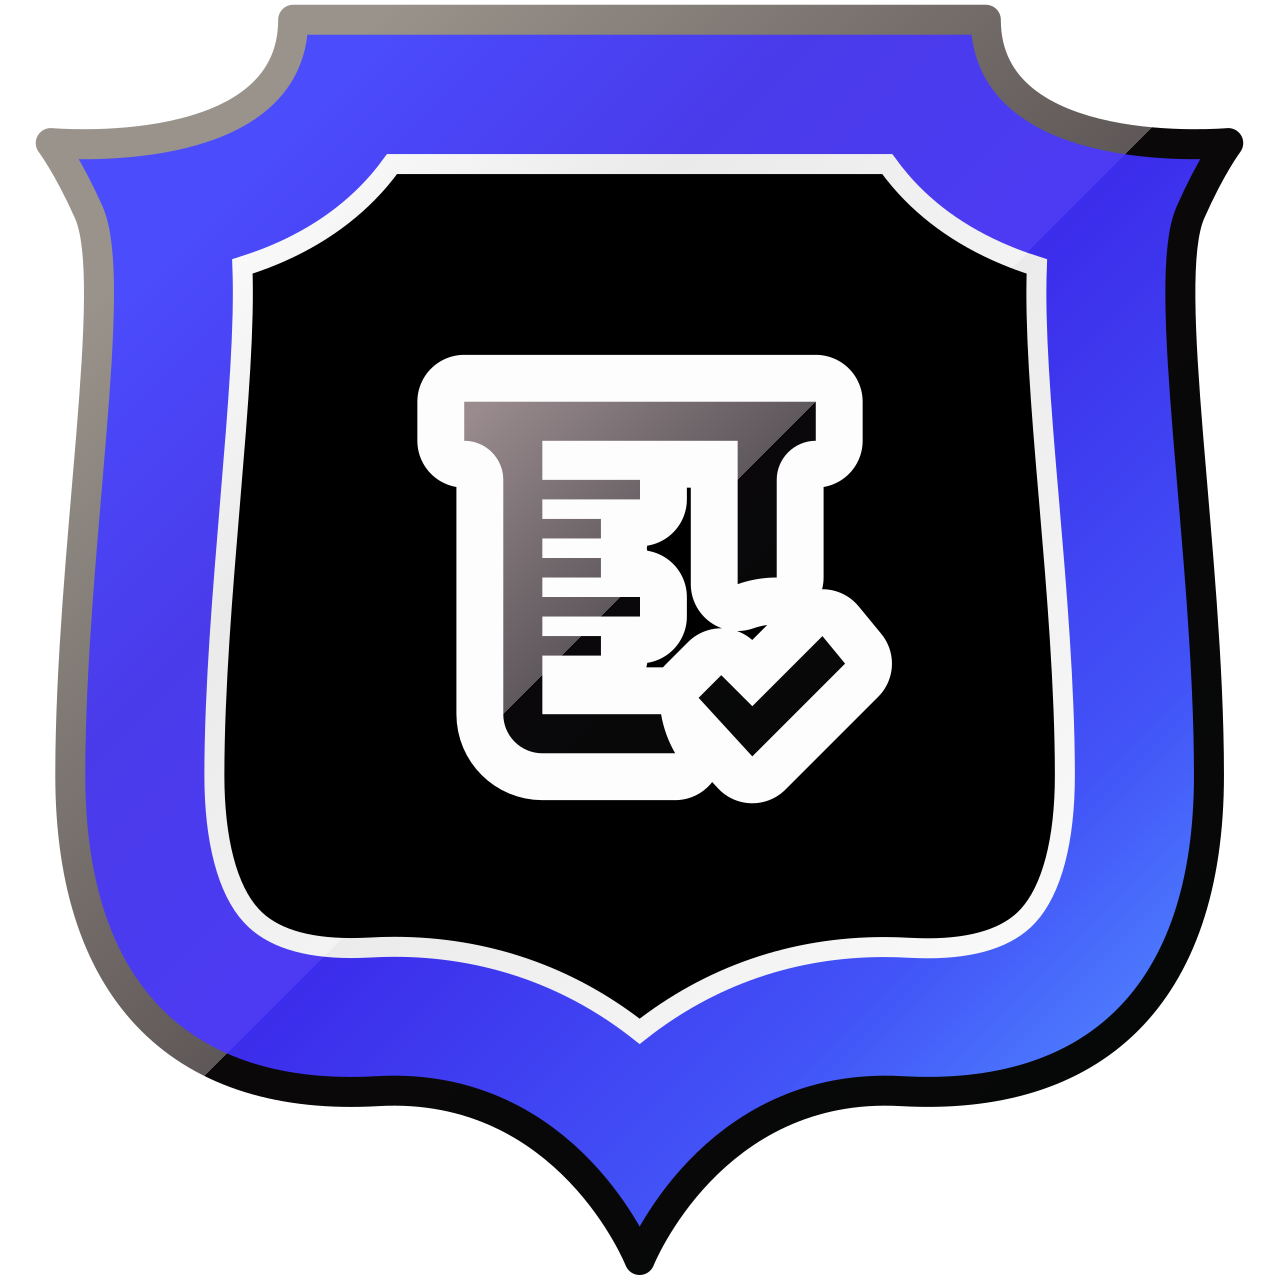 Quality Improvement course badge icon